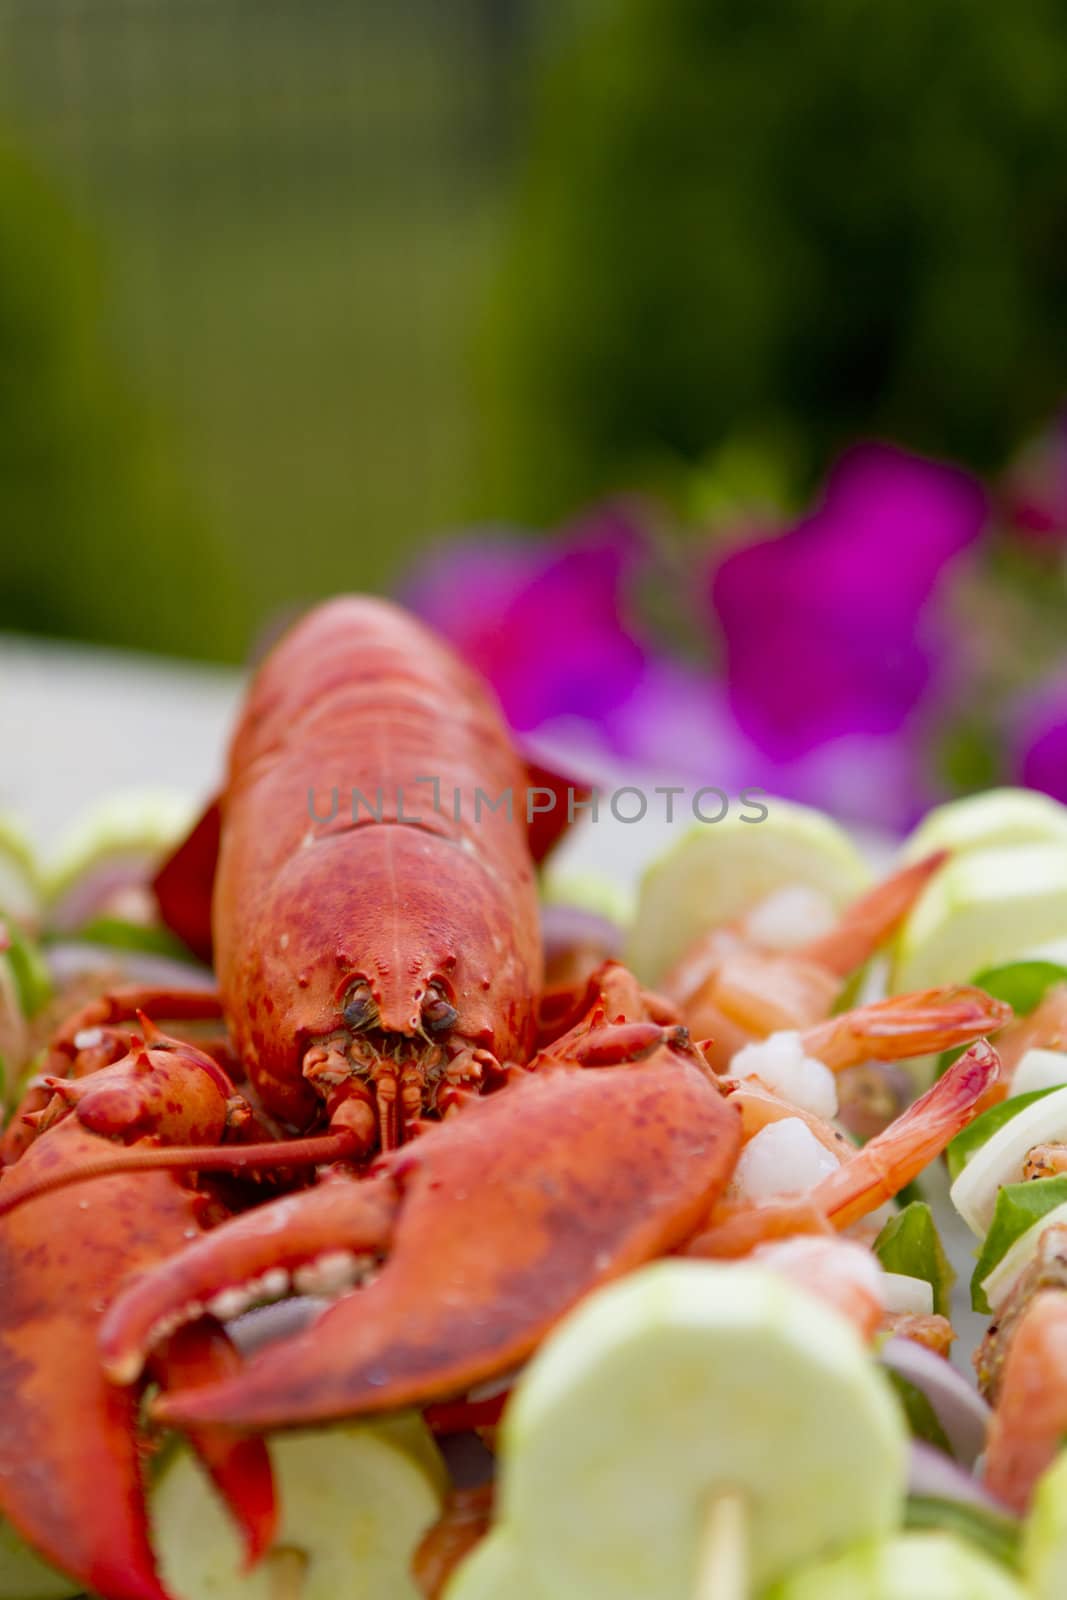 Lobster complimented with vegetable shrimp kebabs, outside.